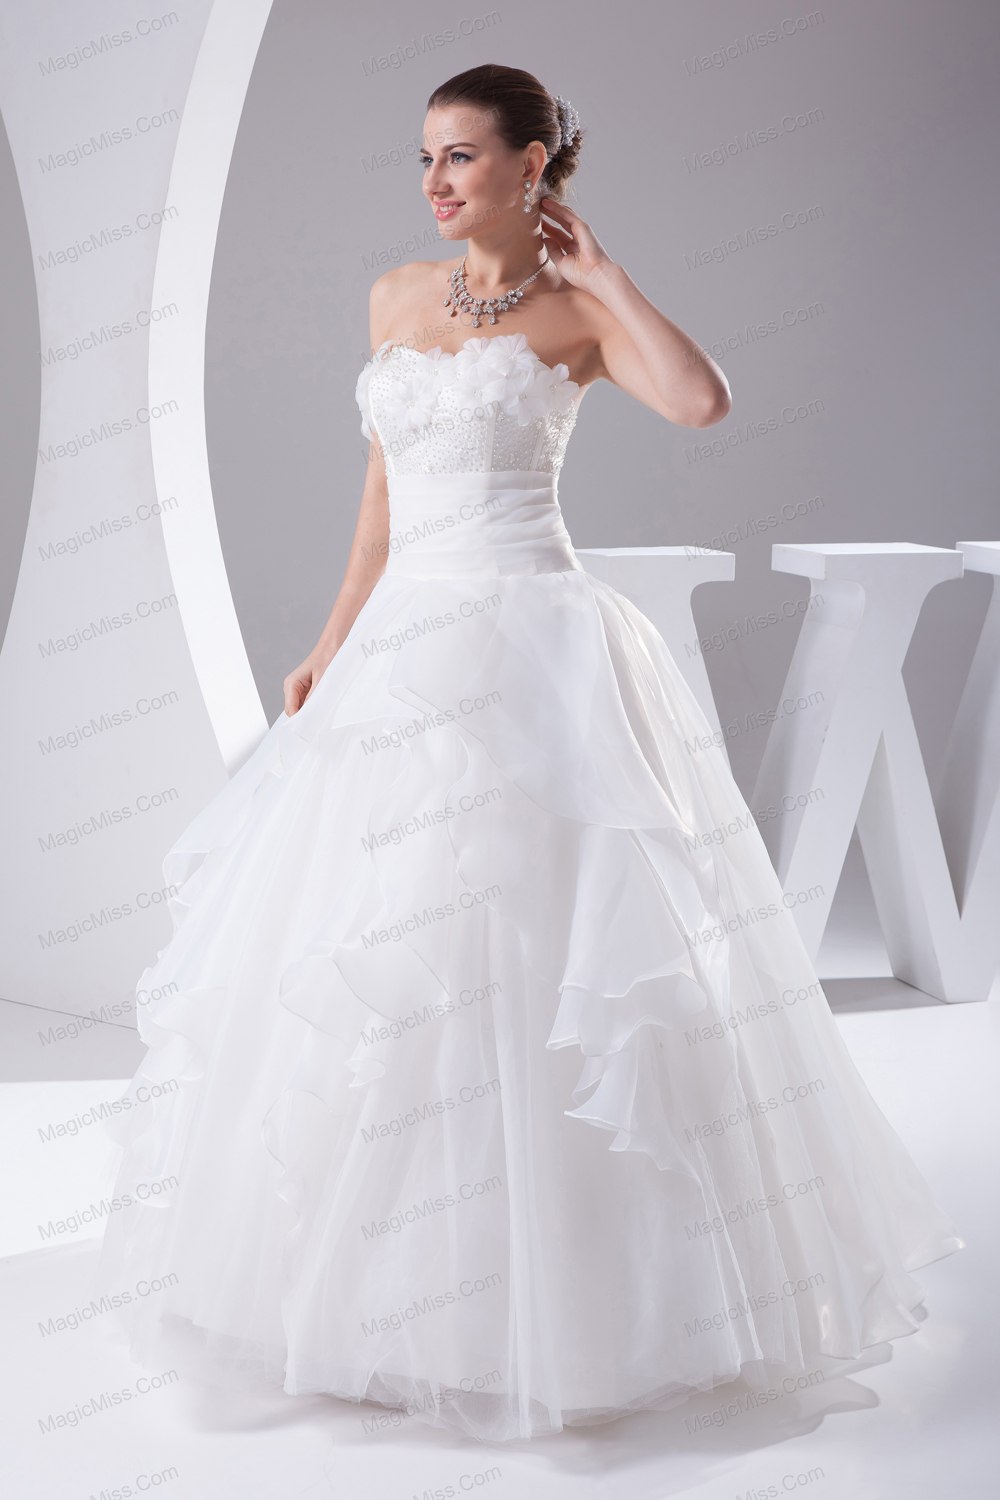 wholesale beading 2013 beautiful long ball gown sweetheart wedding dress